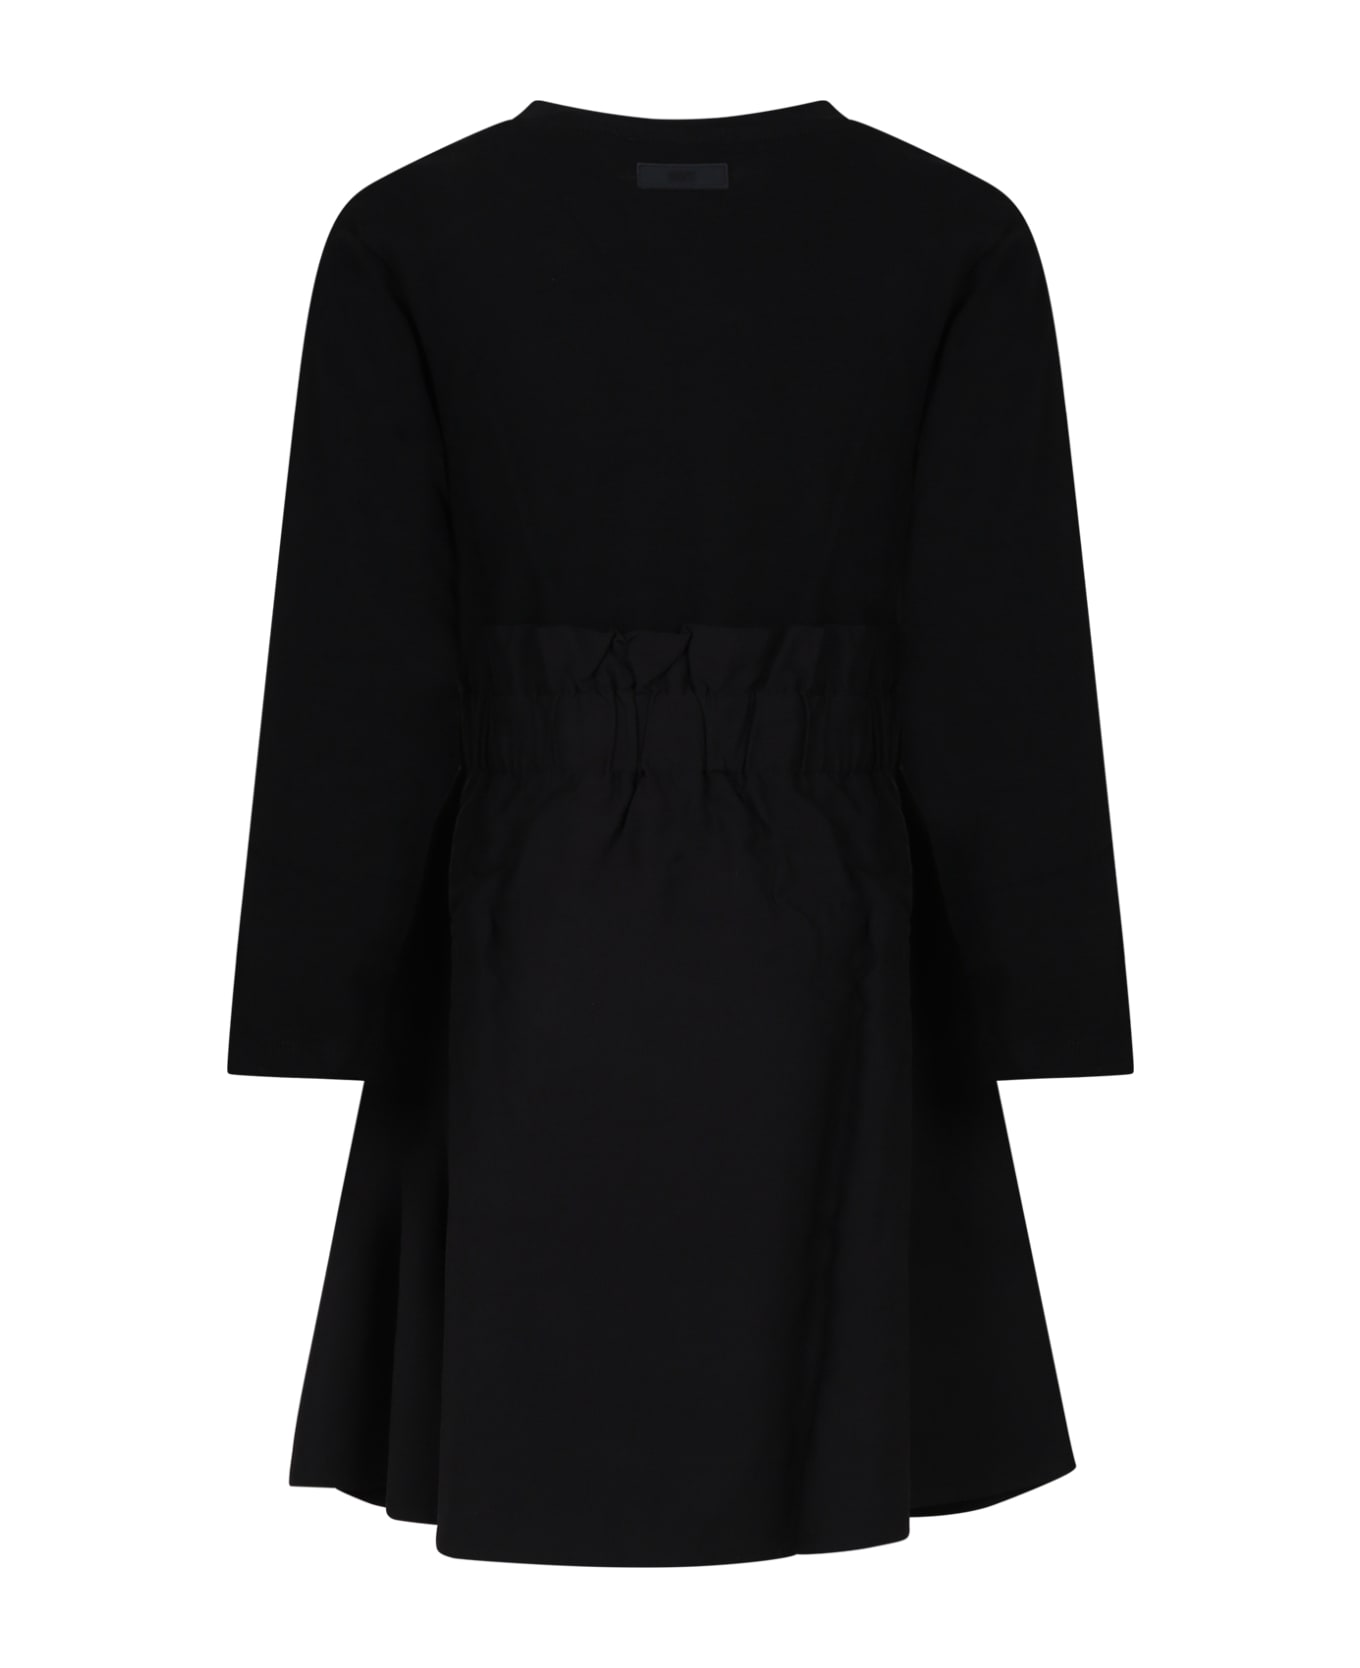 DKNY Black Dress For Girl With Logo - B Nero ワンピース＆ドレス